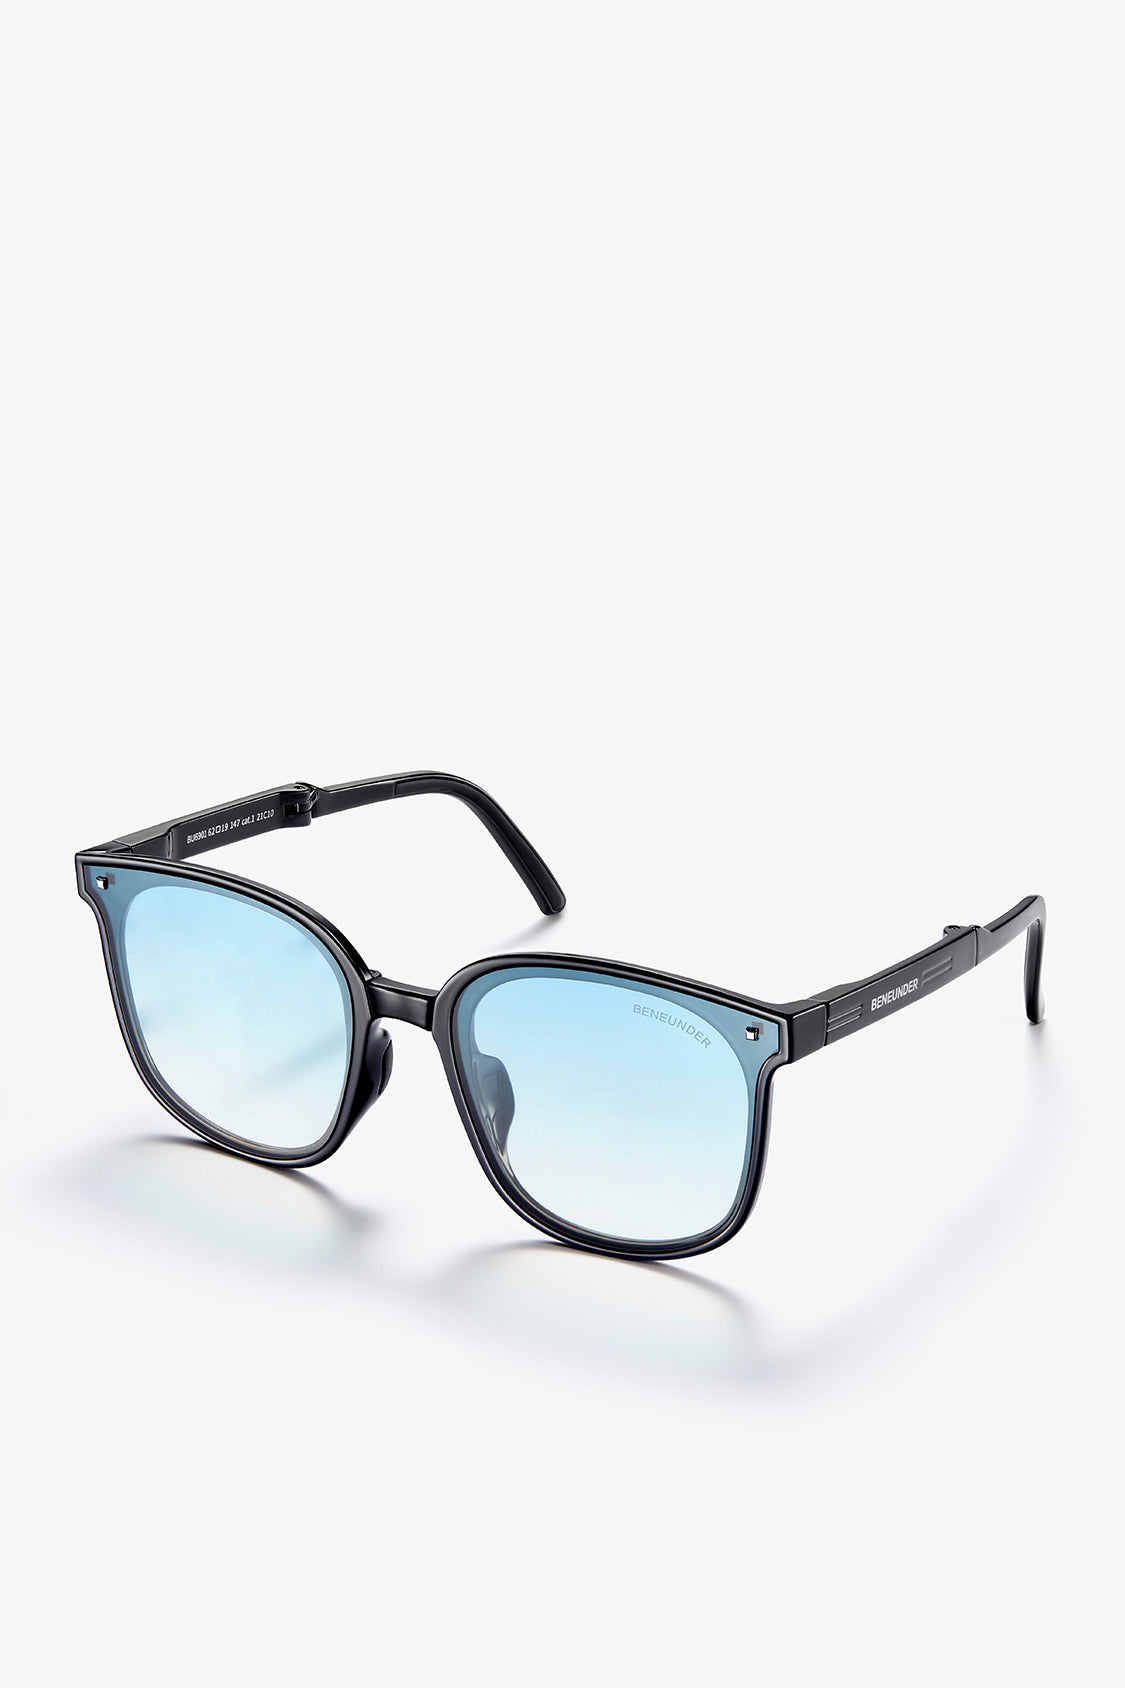 Beneunder Polarized Folding Sunglasses for Men&Women, Designer Square Super  Lightweighted Sunglasses with UV Protection - Black